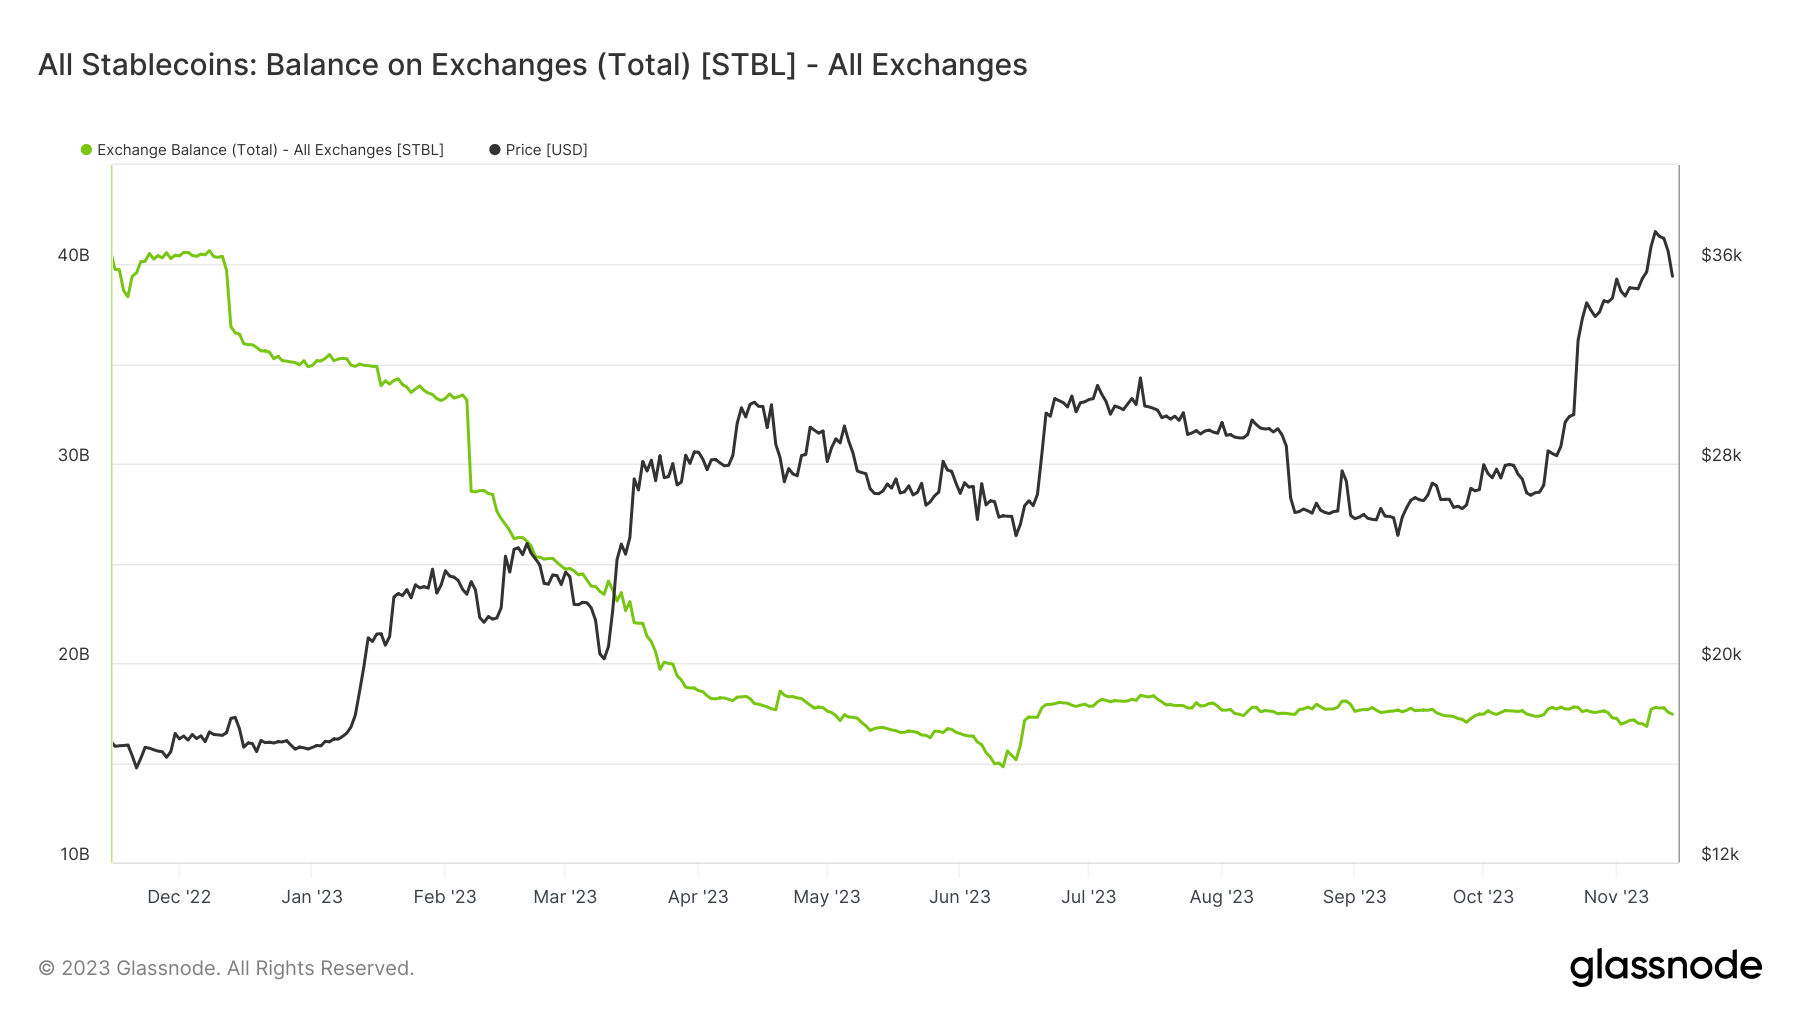 Stablecoin Exchange Balance: (Source: Glassnode)